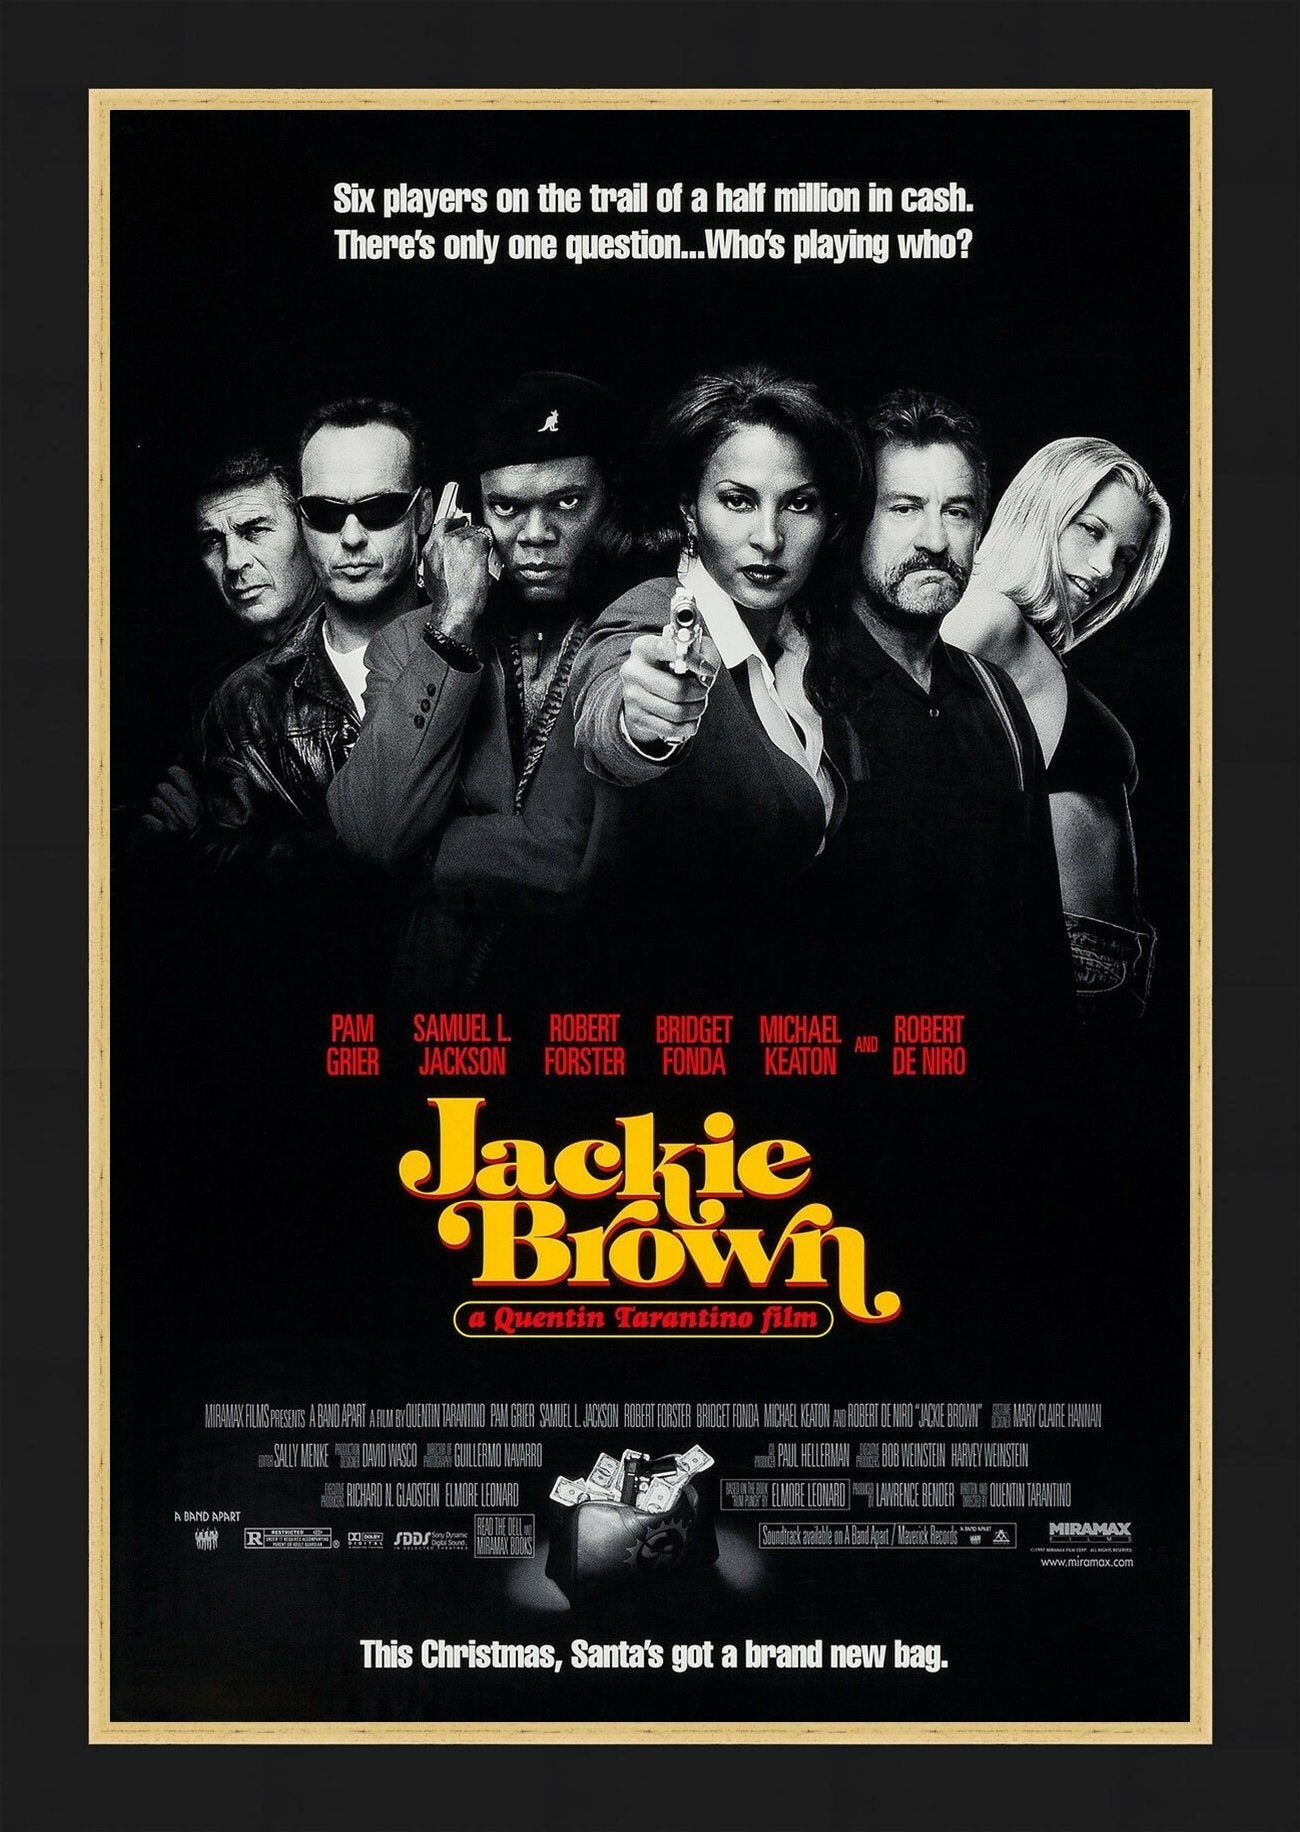 An original movie poster for the Tarantino film Jackie Brown